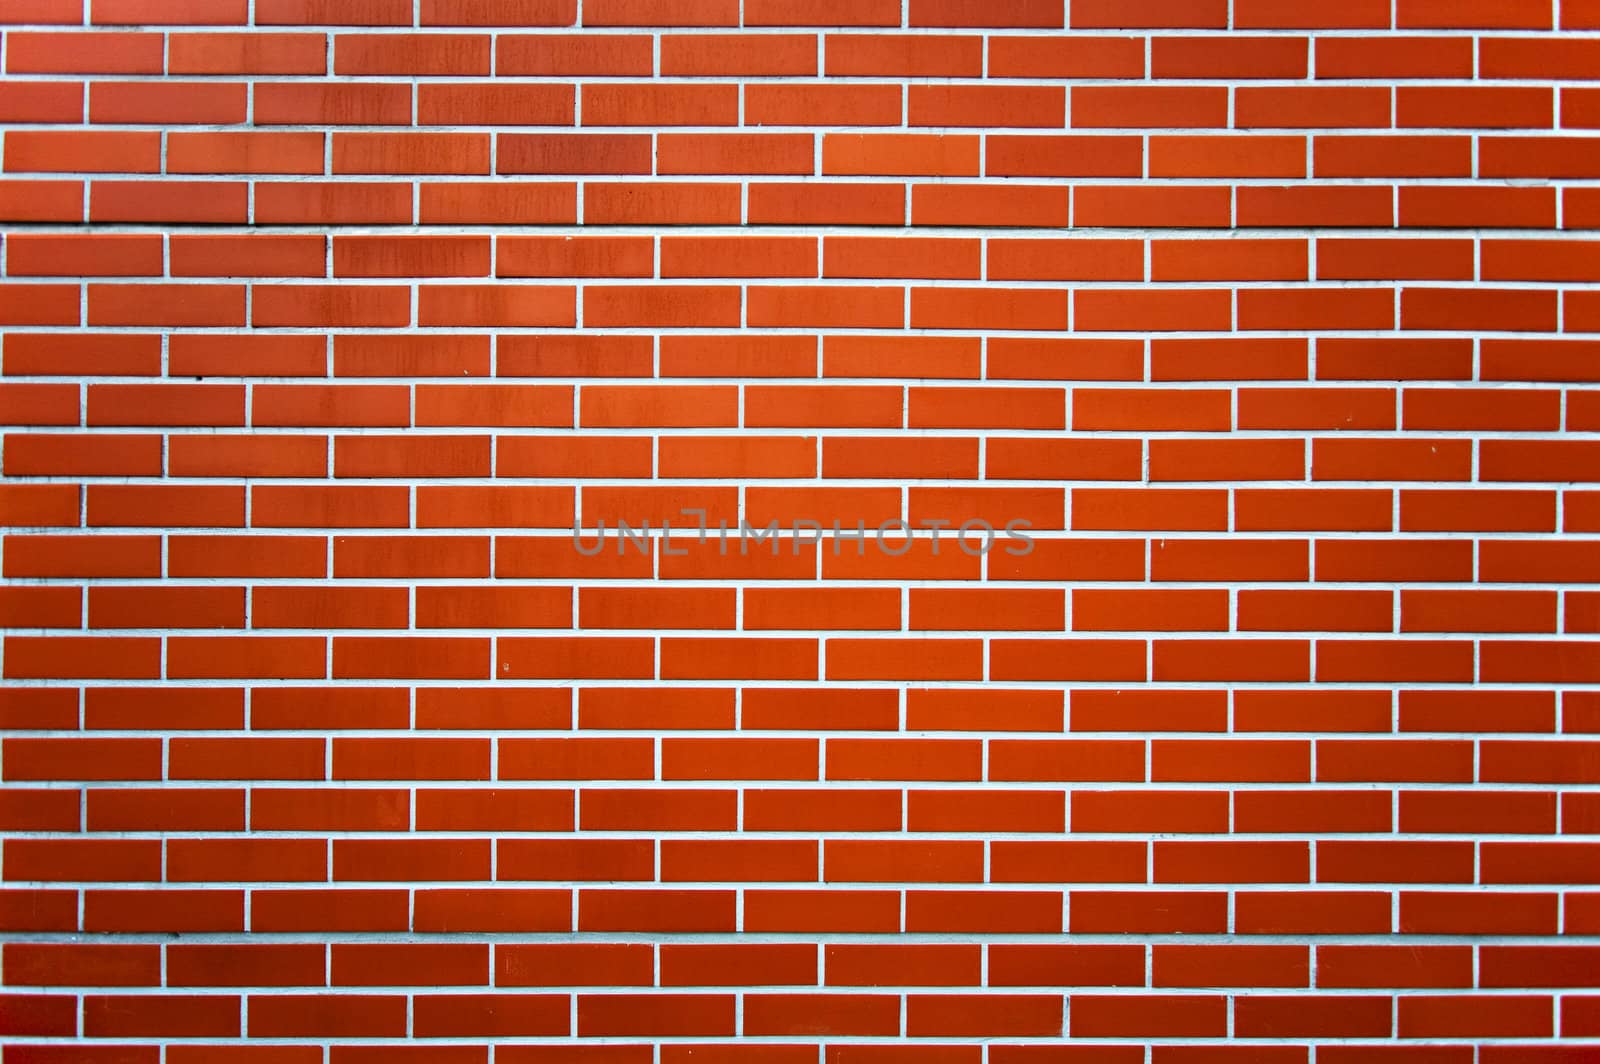 Brick Wall by ajn